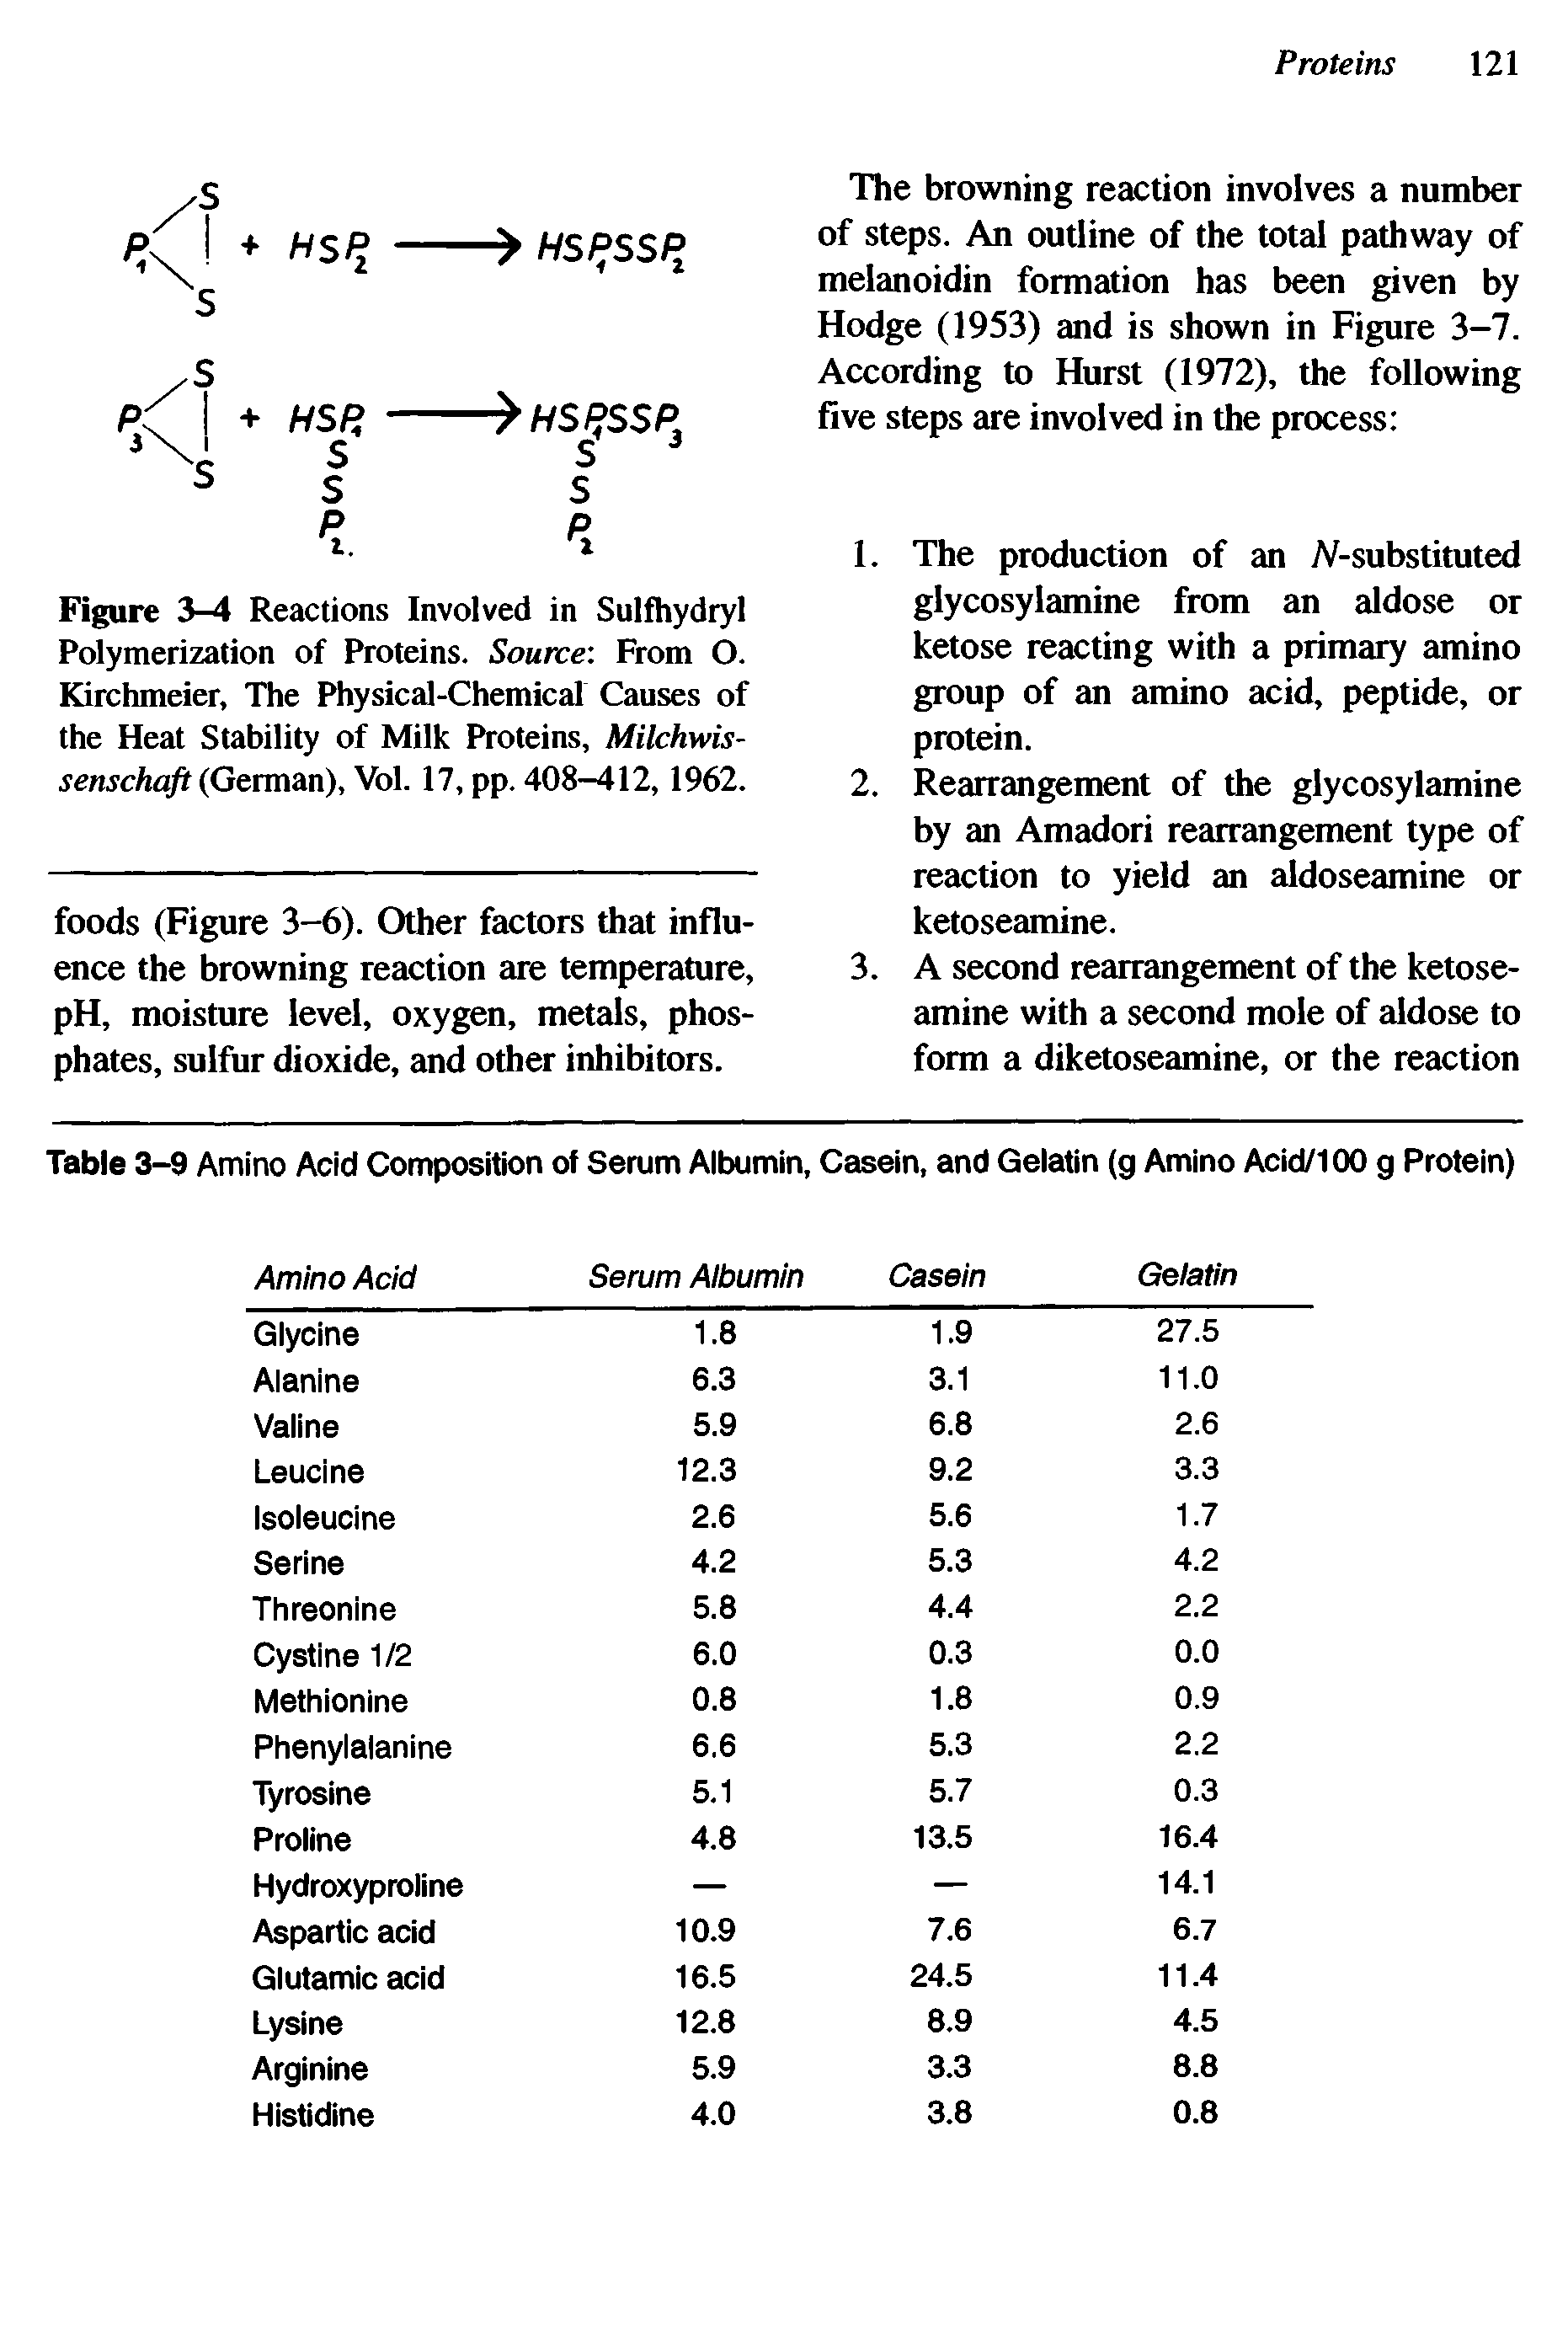 Table 3-9 Amino Acid Composition of Serum Albumin, Casein, and Gelatin (g Amino Acid/100 g Protein)...